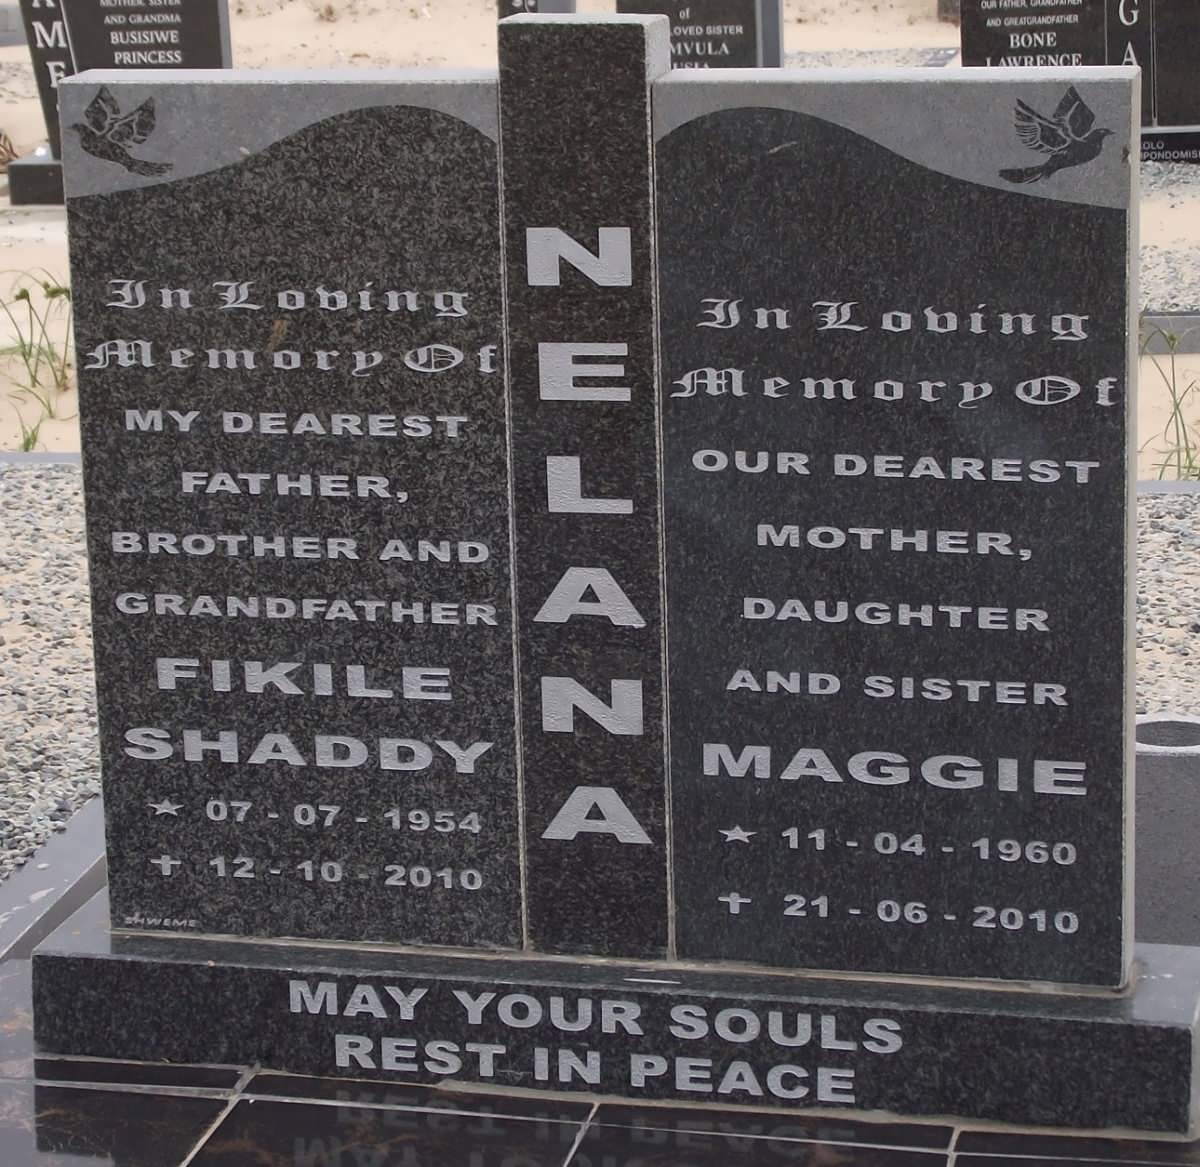 NELANA Fikile Shaddy 1954-2010 & Maggie 1960-2010